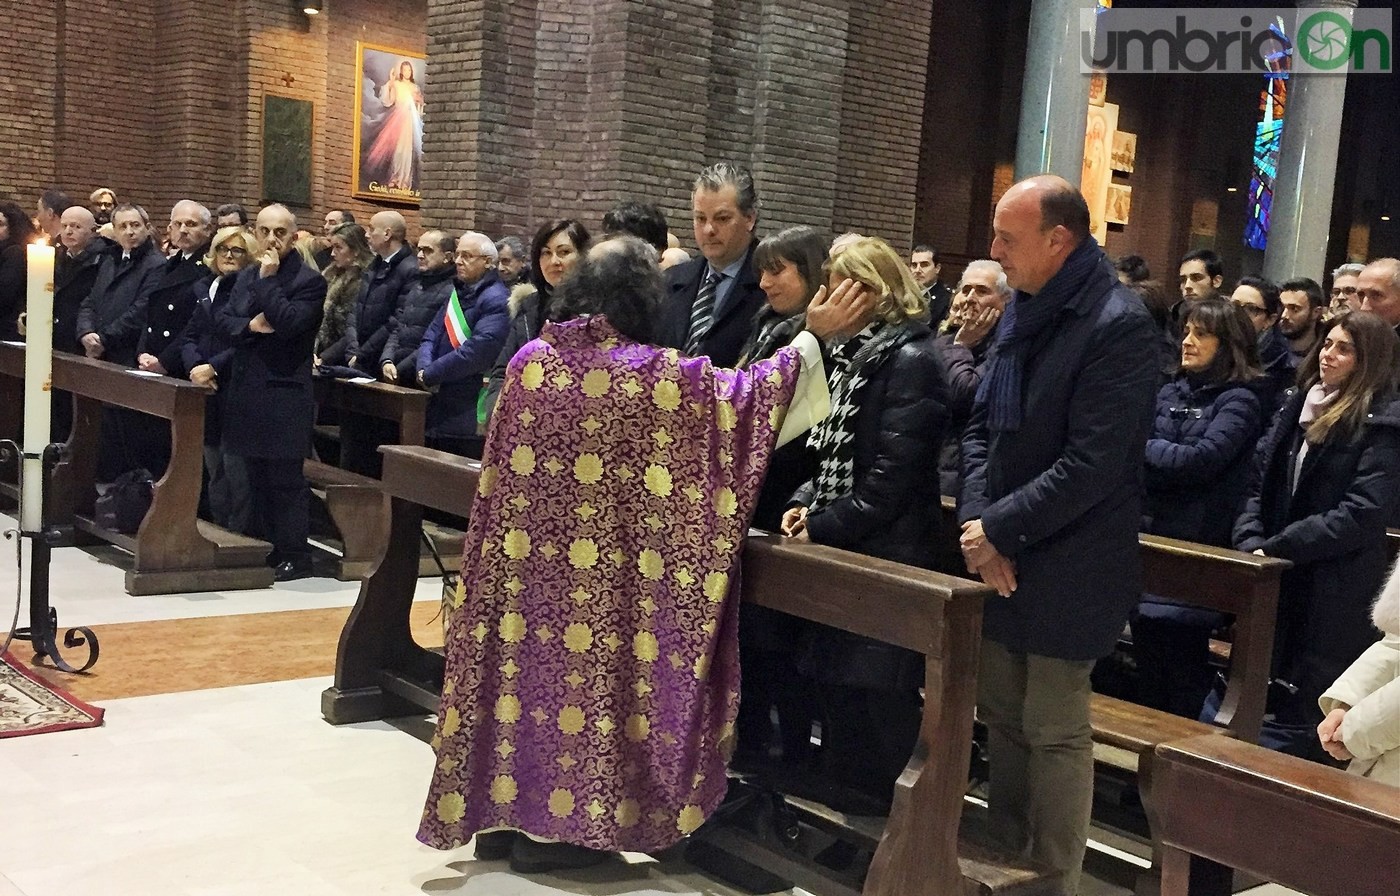 Funerali Maurizio Santoloci - 9 gennaio 2017 (7)